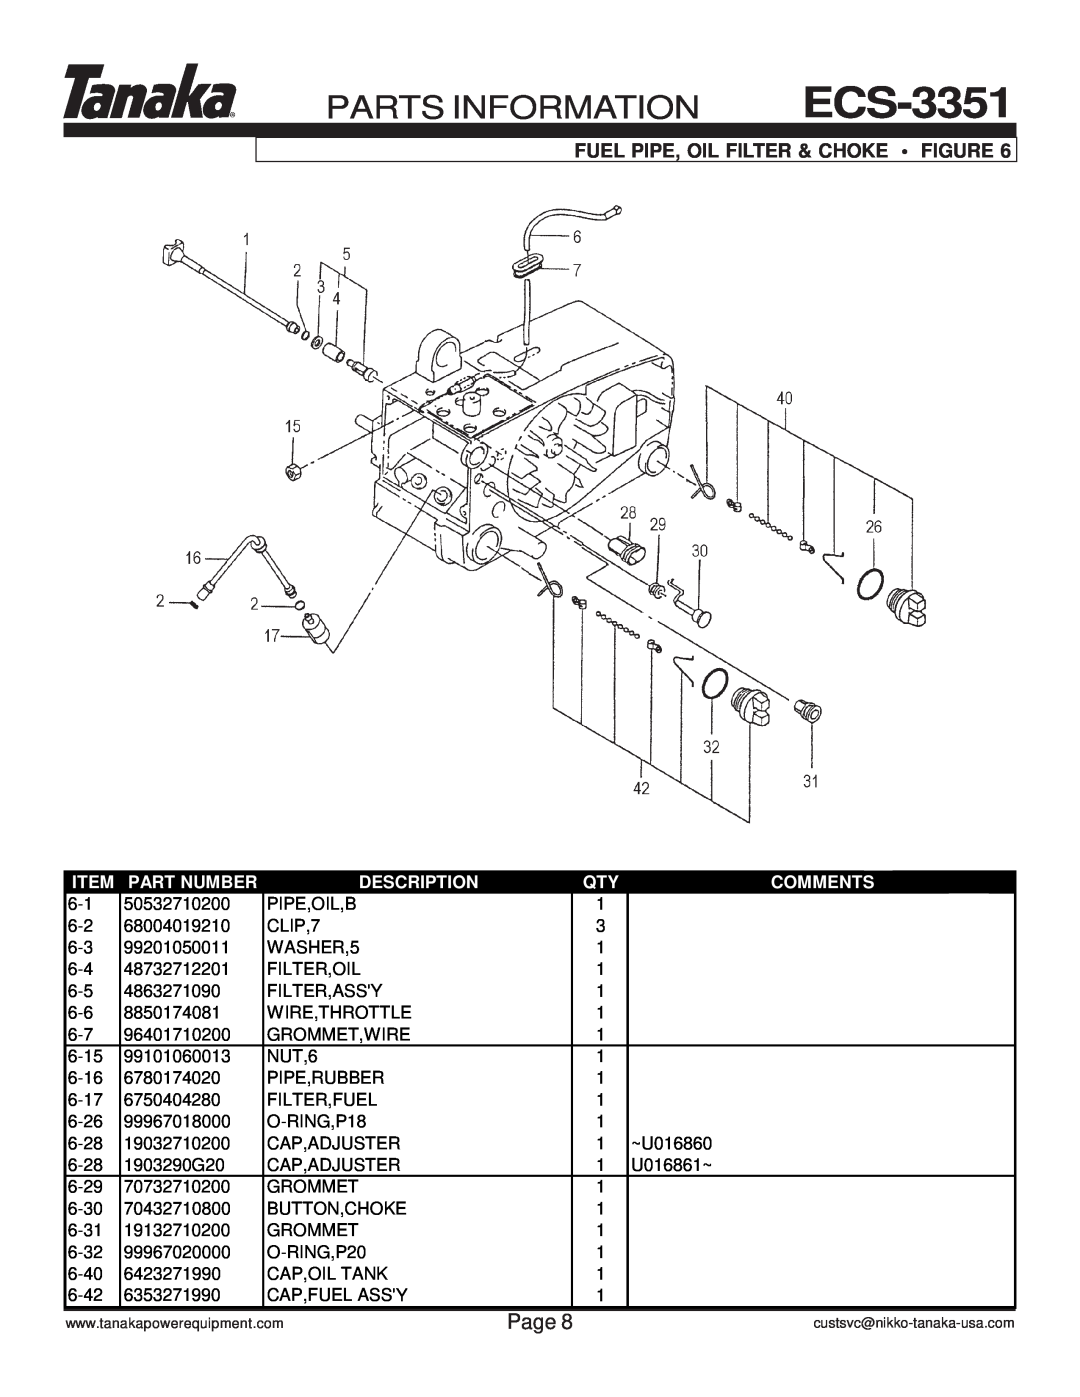 Tanaka ECS-3351/B manual Fuel Pipe, Oil Filter & Choke Figure, Parts Information, Page, Part Number, Description, Comments 